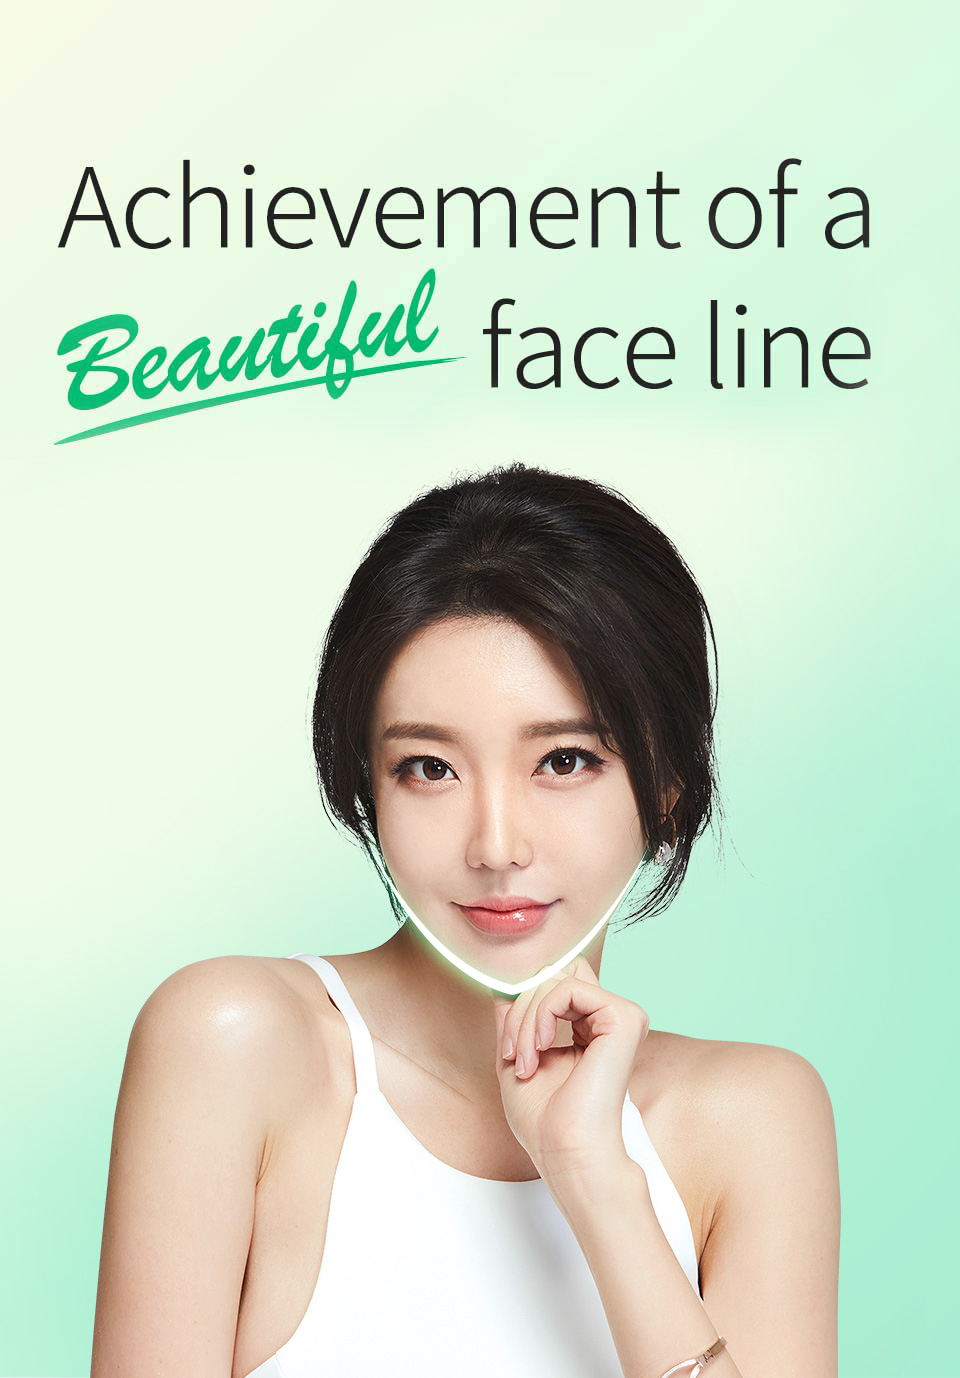 Achievement of a beautiful face line